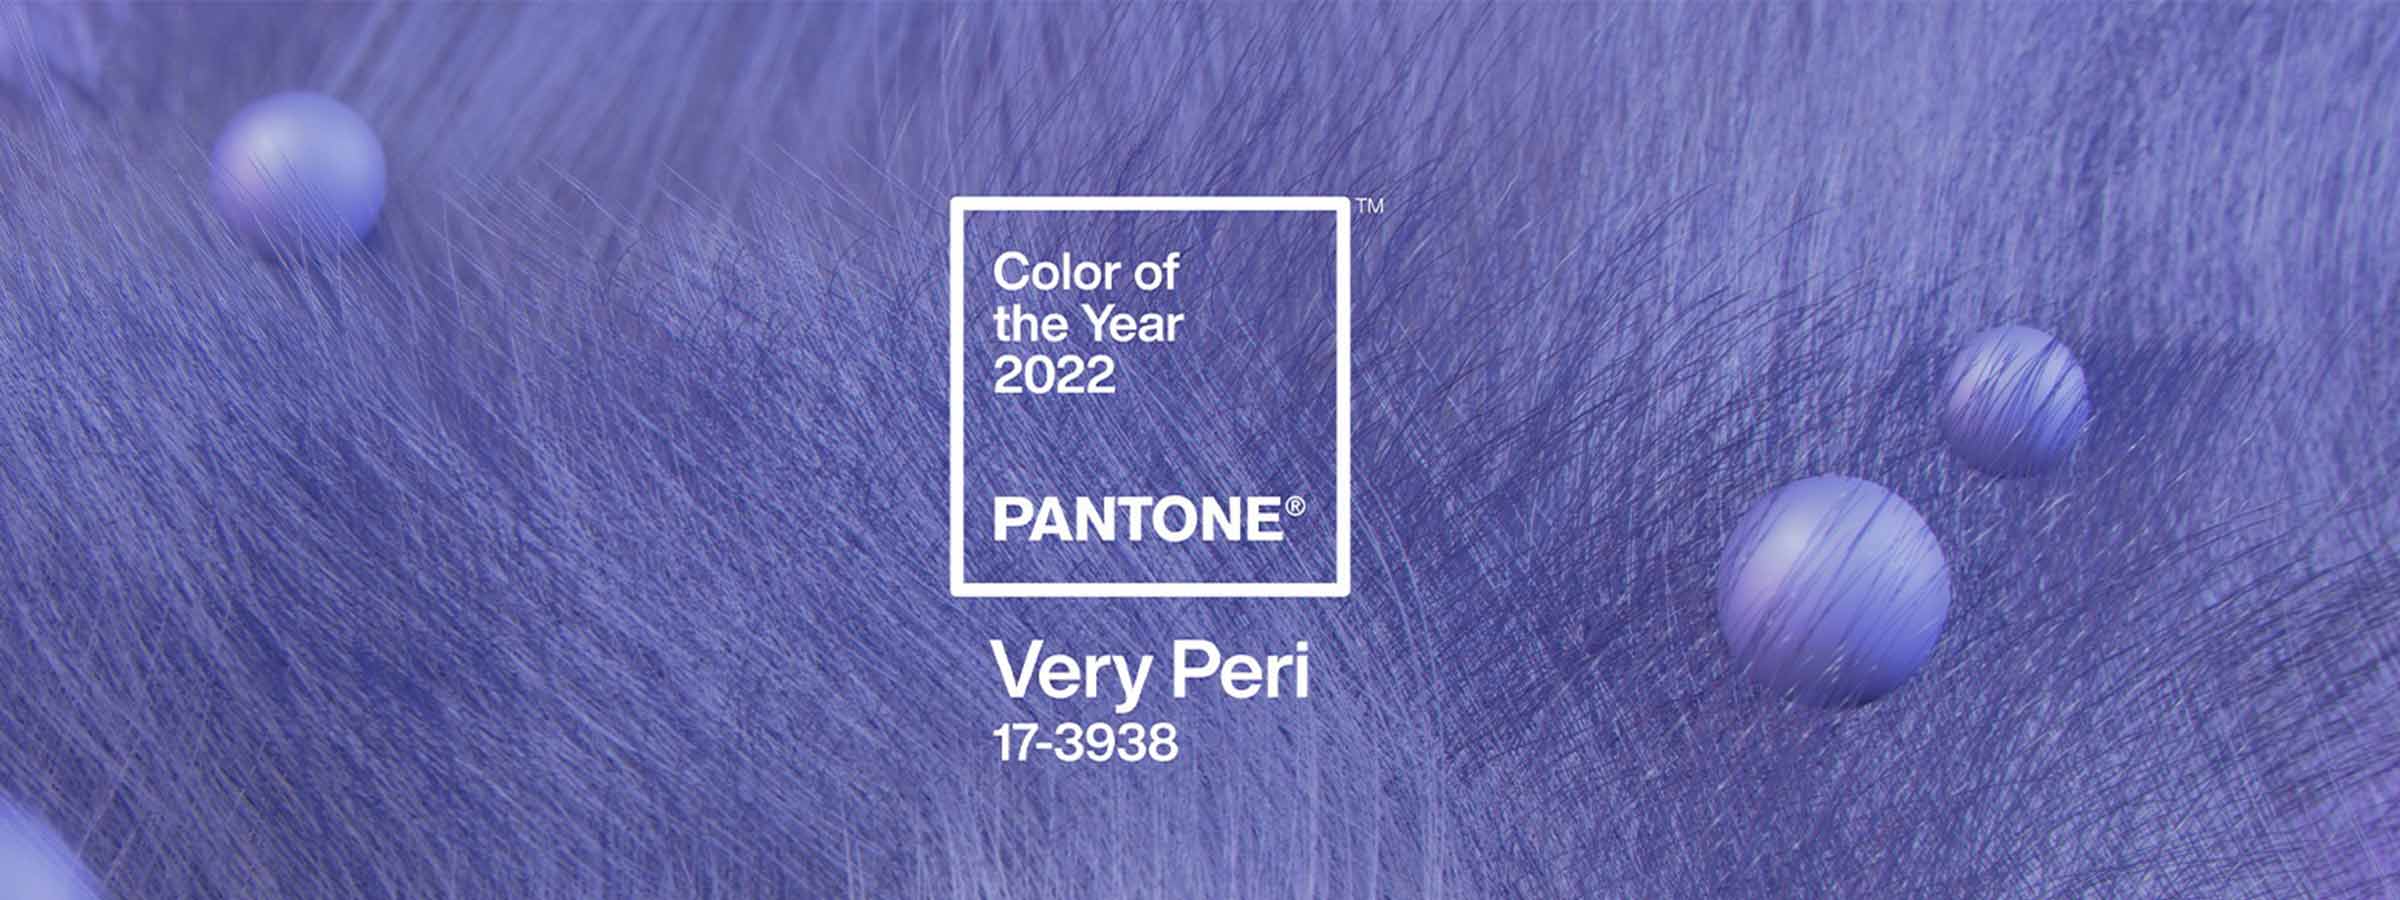 Pantone Very Peri 2022 - Design Italy